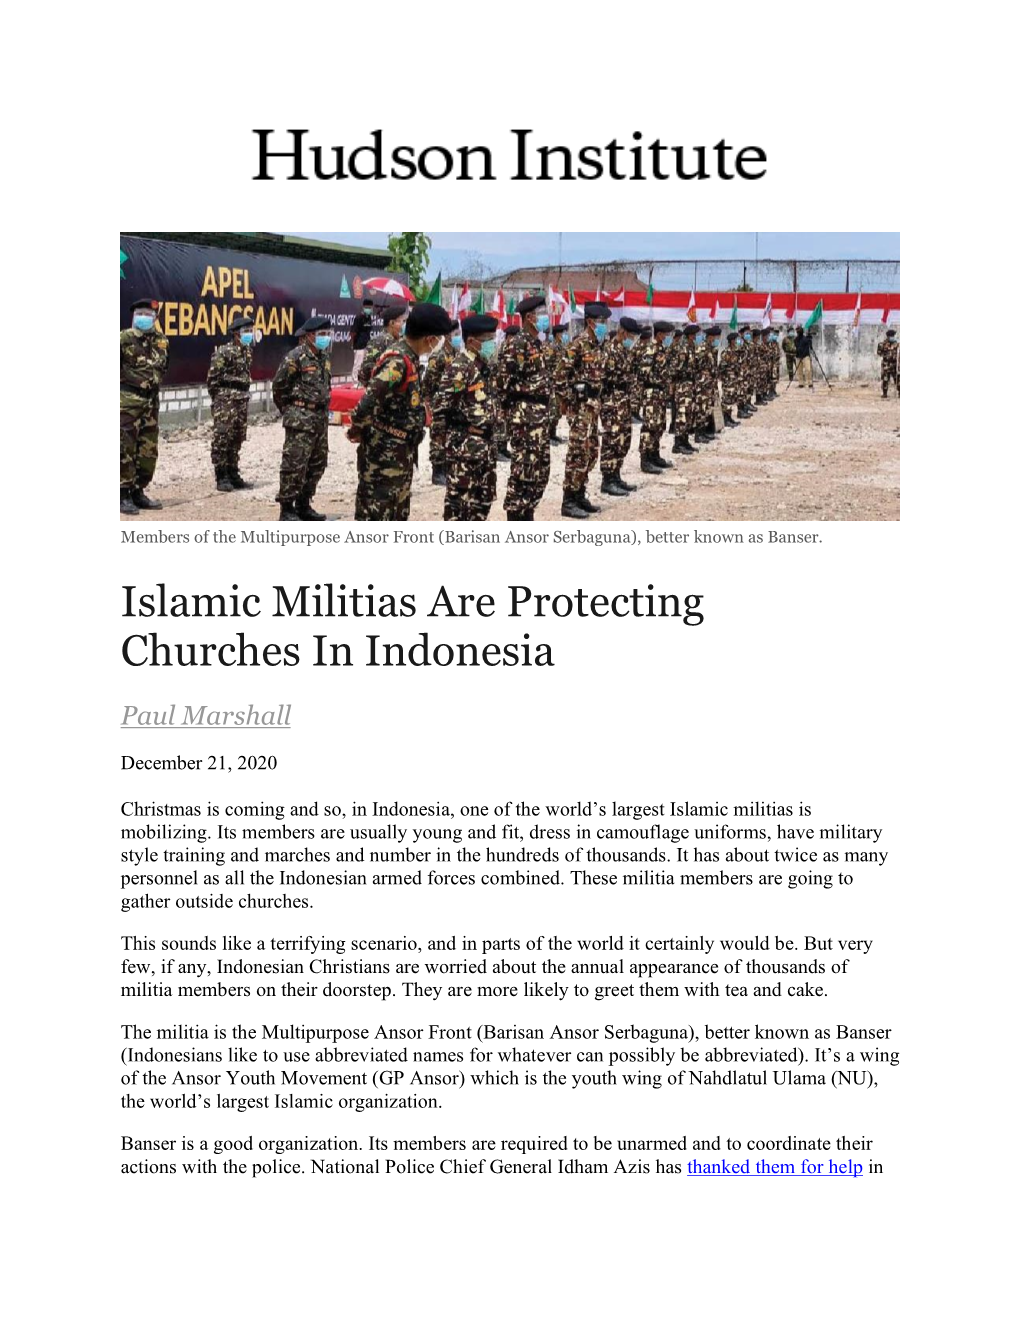 Islamic Militias Are Protecting Churches in Indonesia